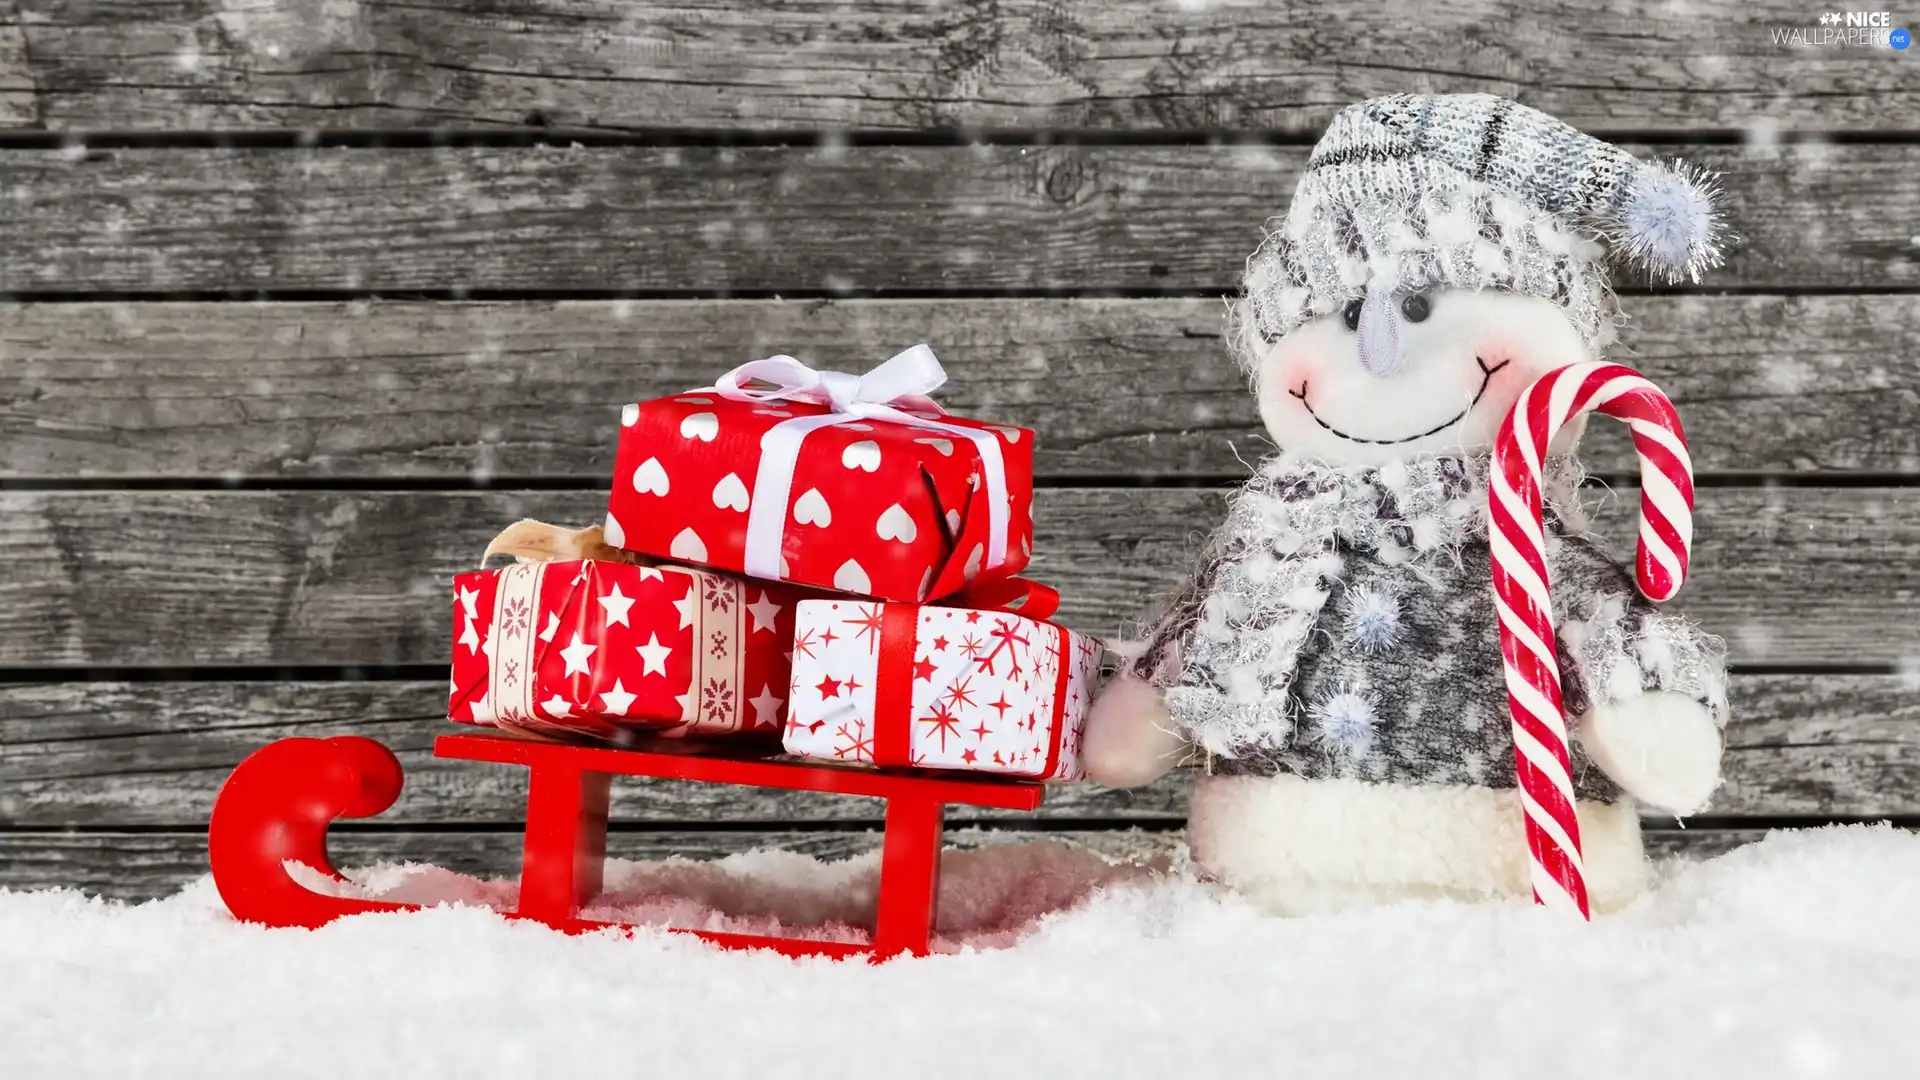 sledge, figure, snow, Snowman, decoration, gifts, Christmas